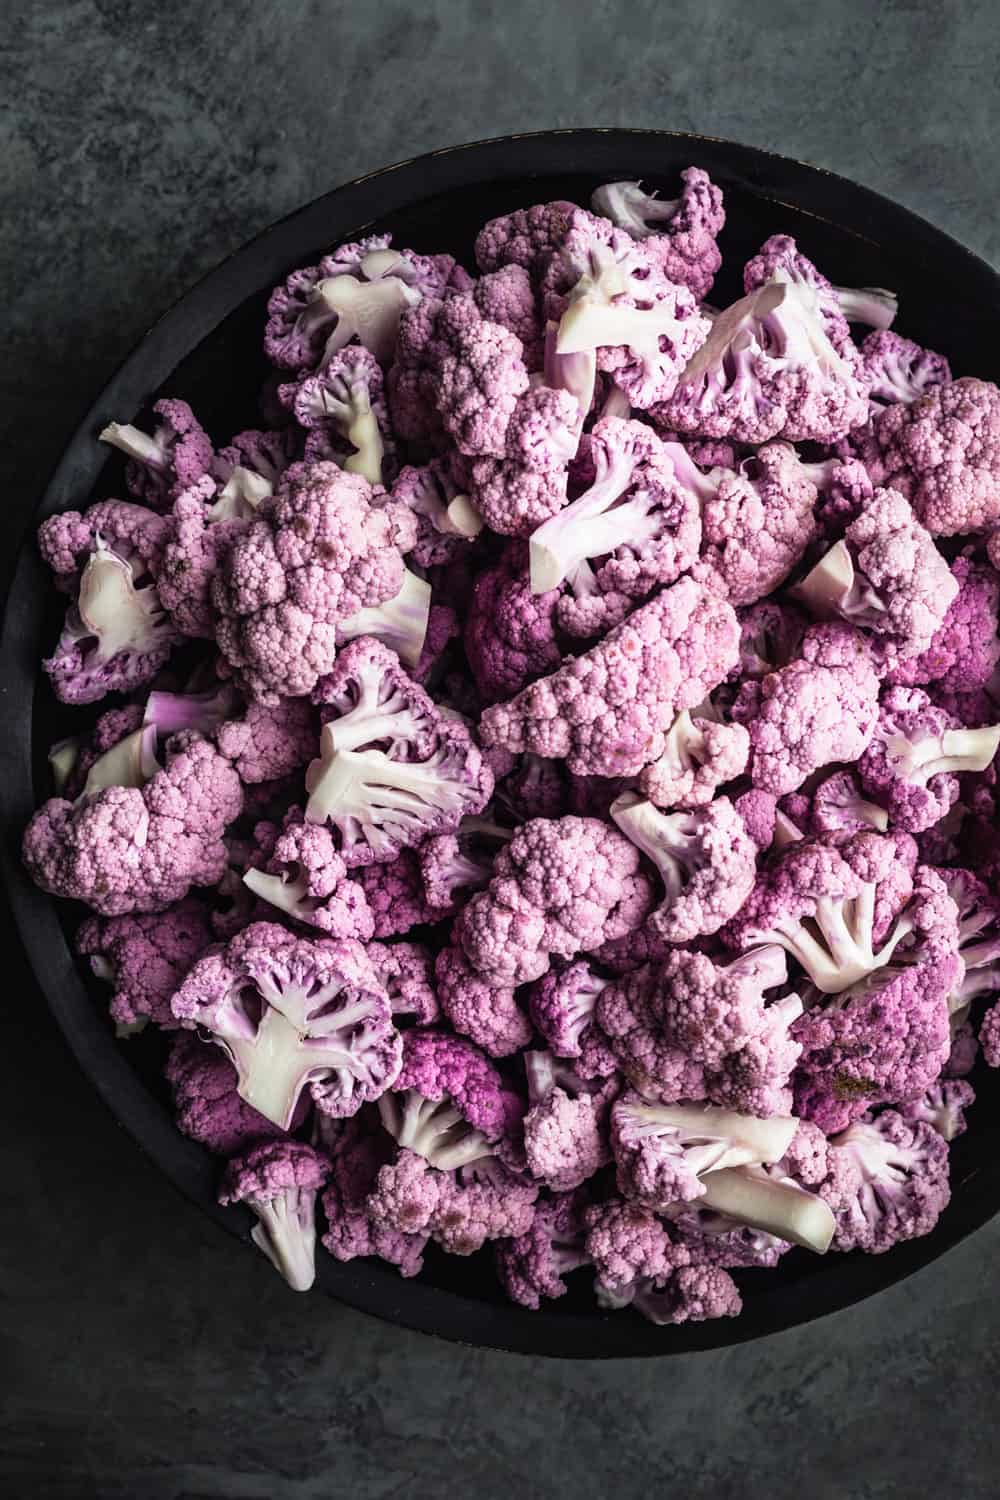 purple cauliflower florets in black bowl